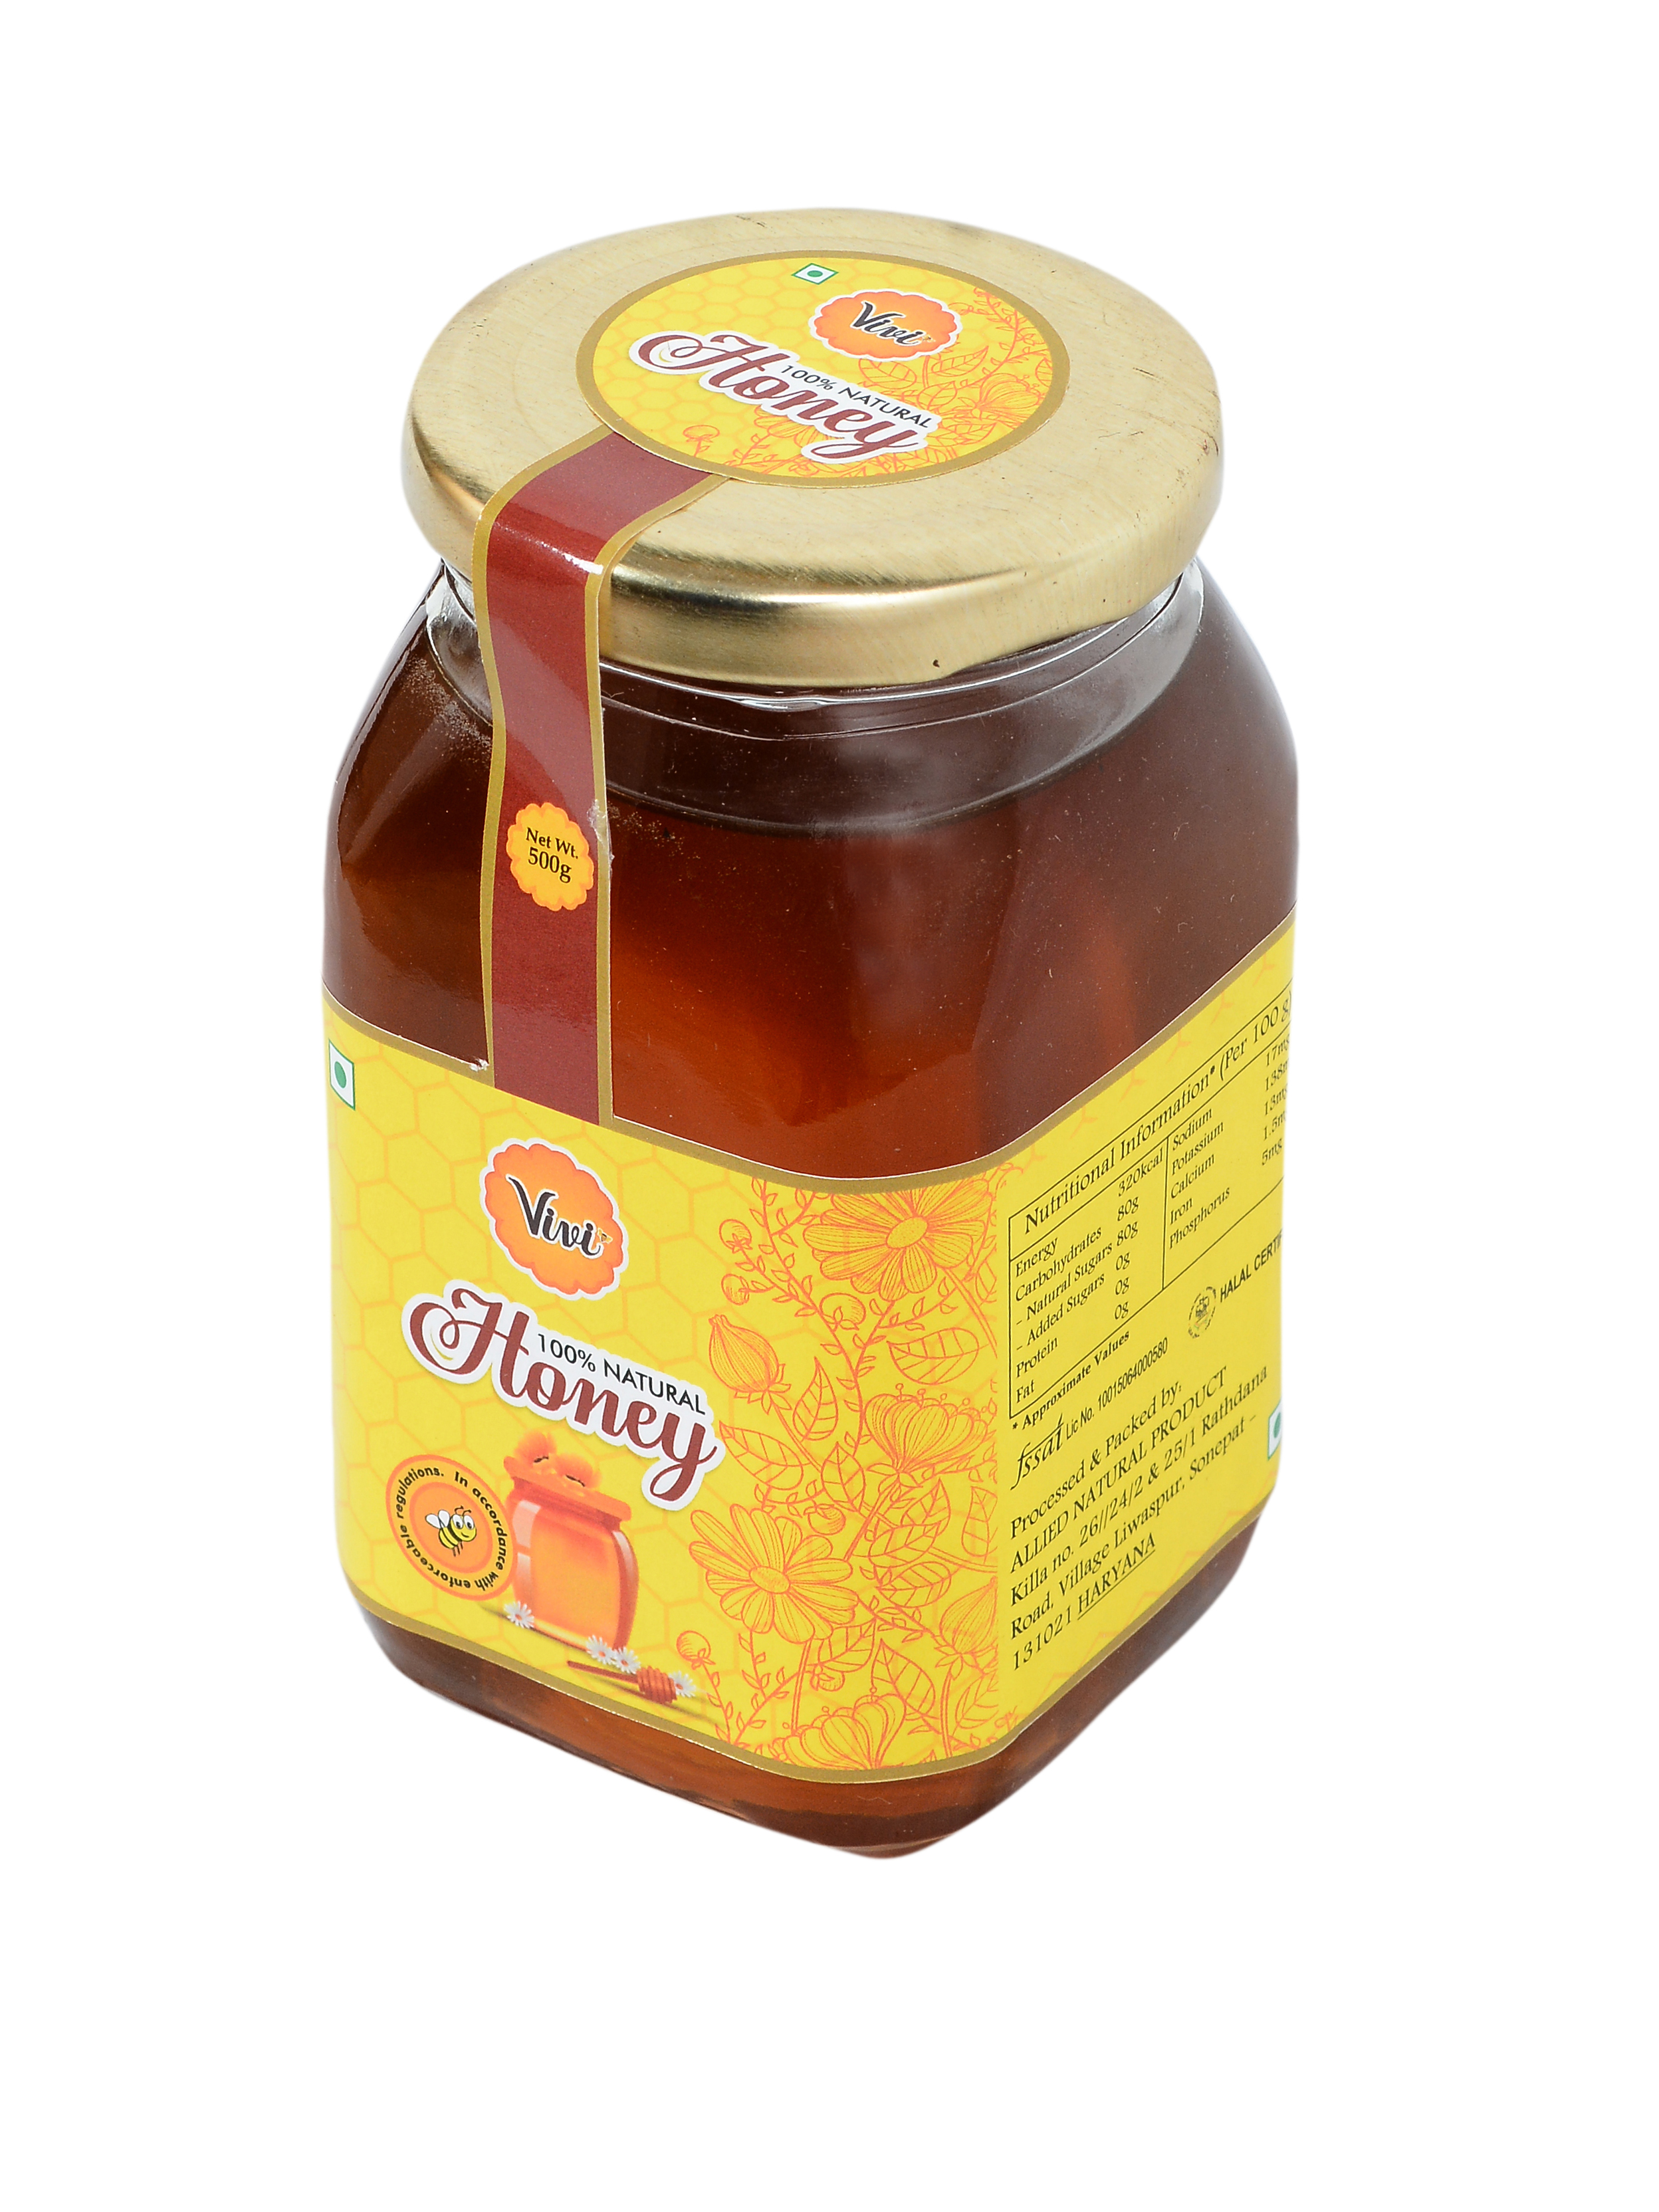 VIVI Natural Honey - square jar